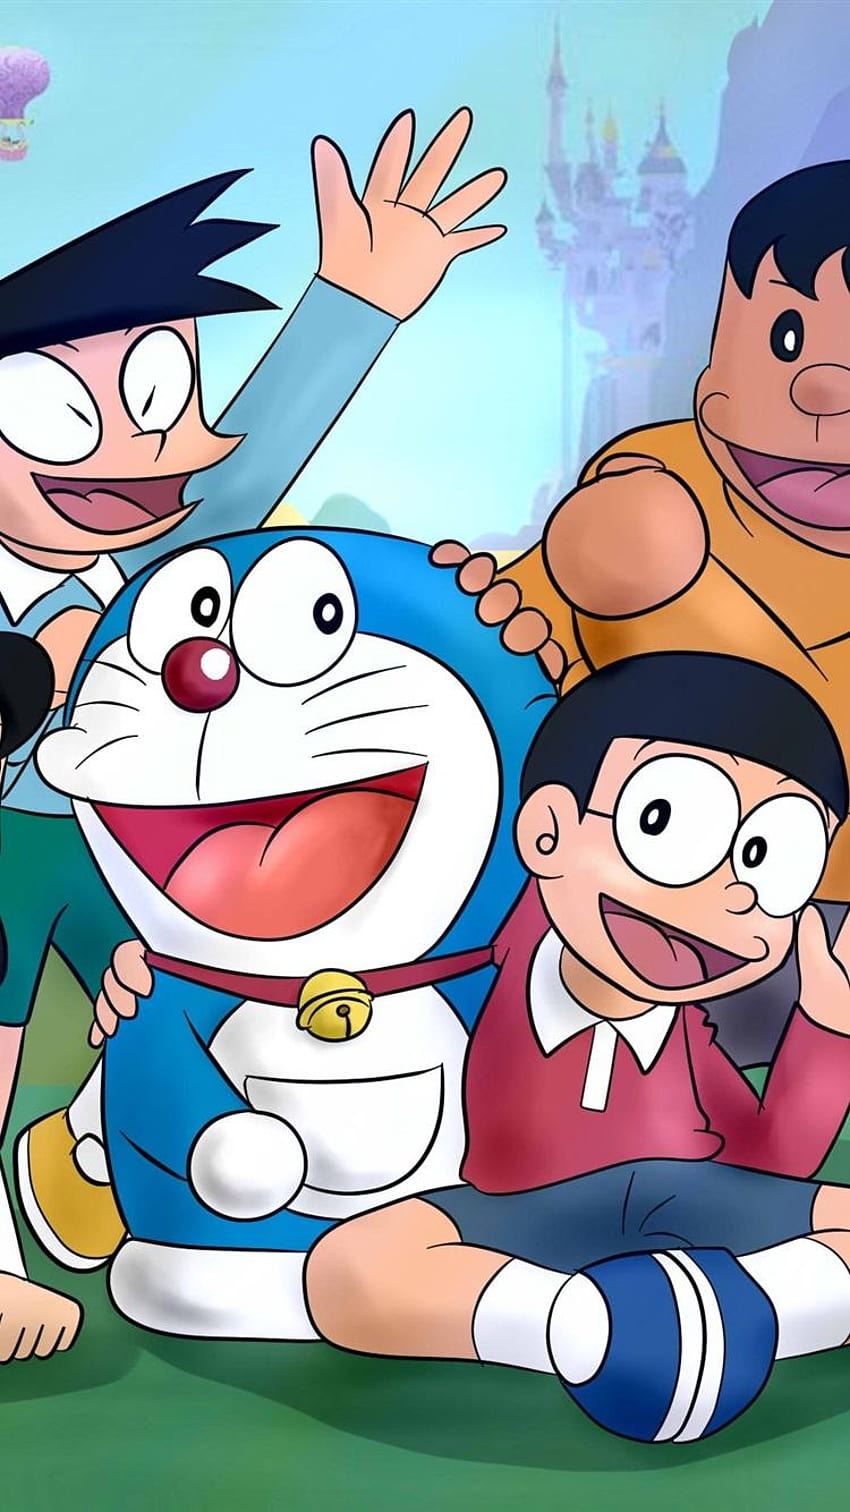 41st Doraemon Anime Film Will Debut on March 5 2021